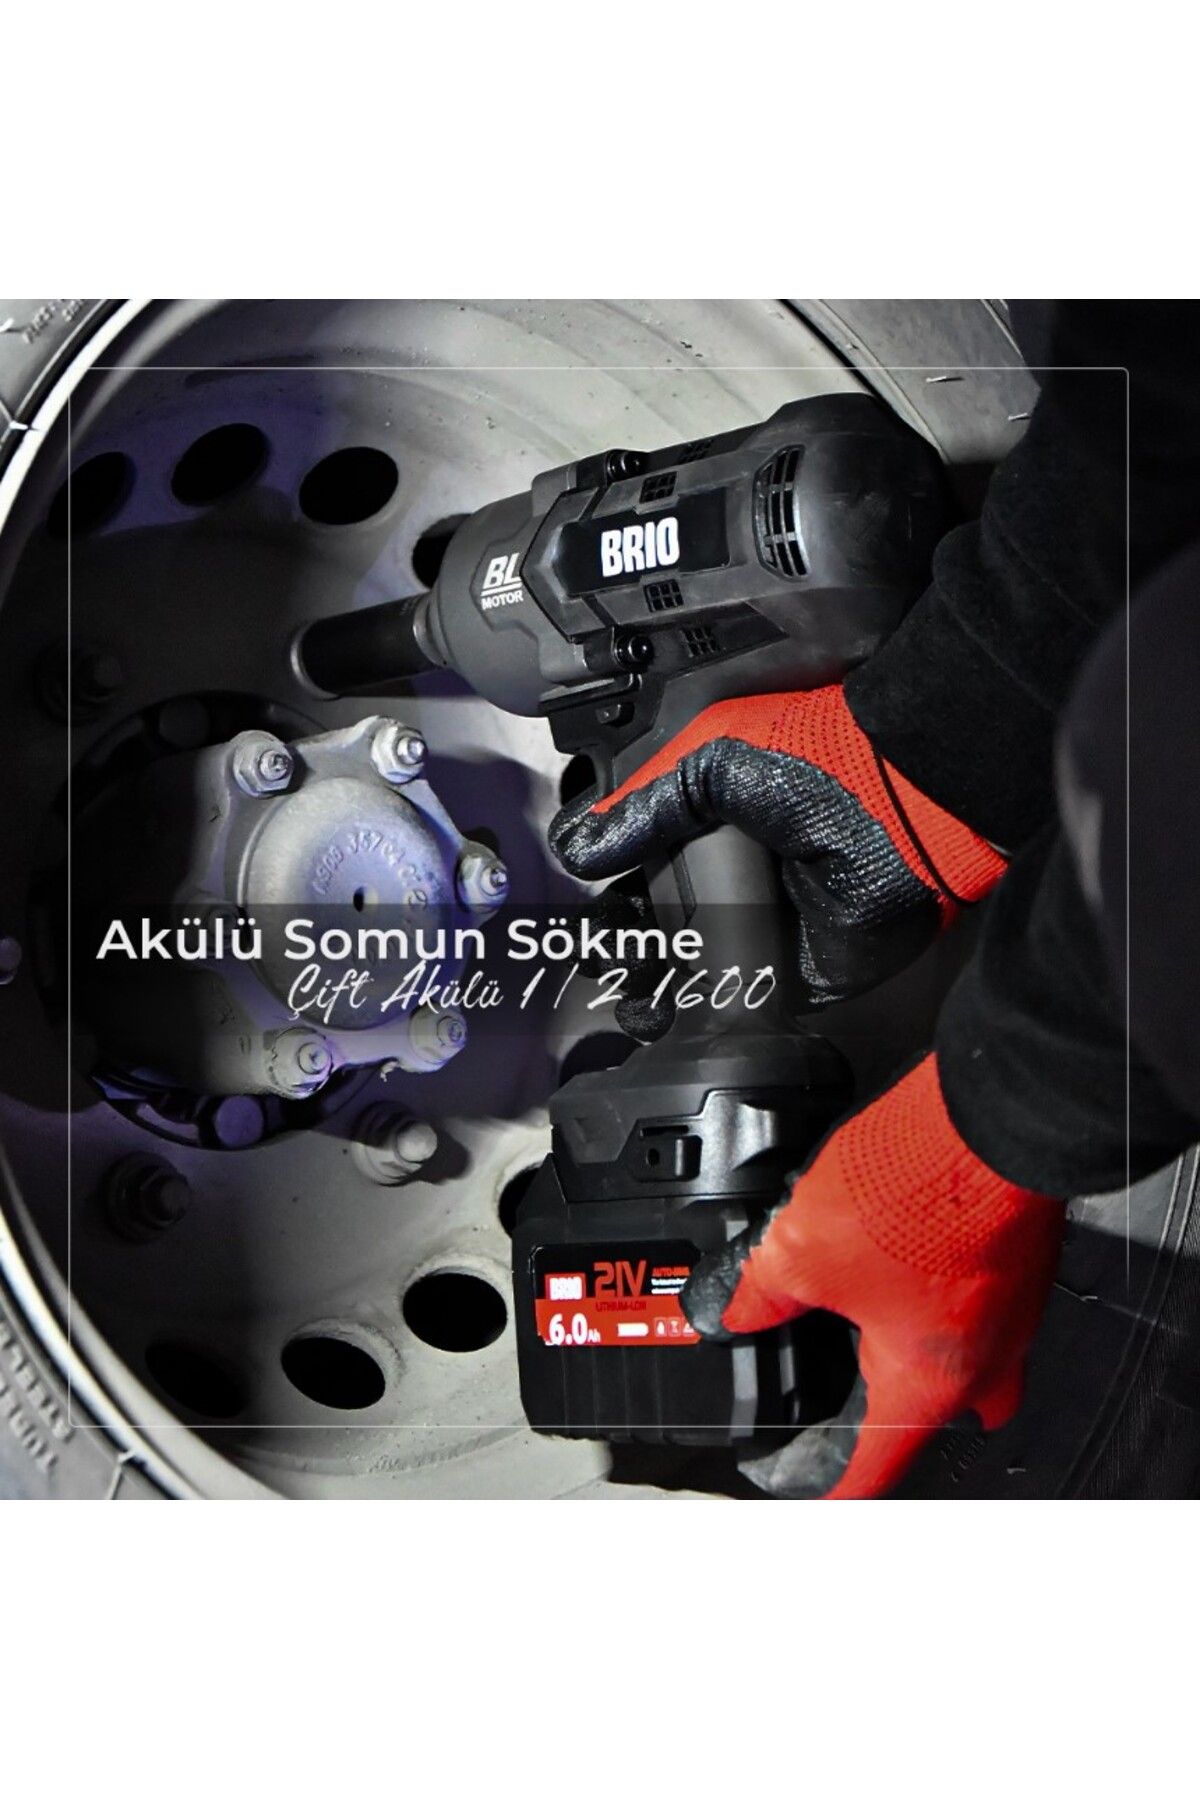 Brio Akülü Somun Sökme Çift akülü 1/2 1600 Nm 21v - 6.0ah 3,7 Kg